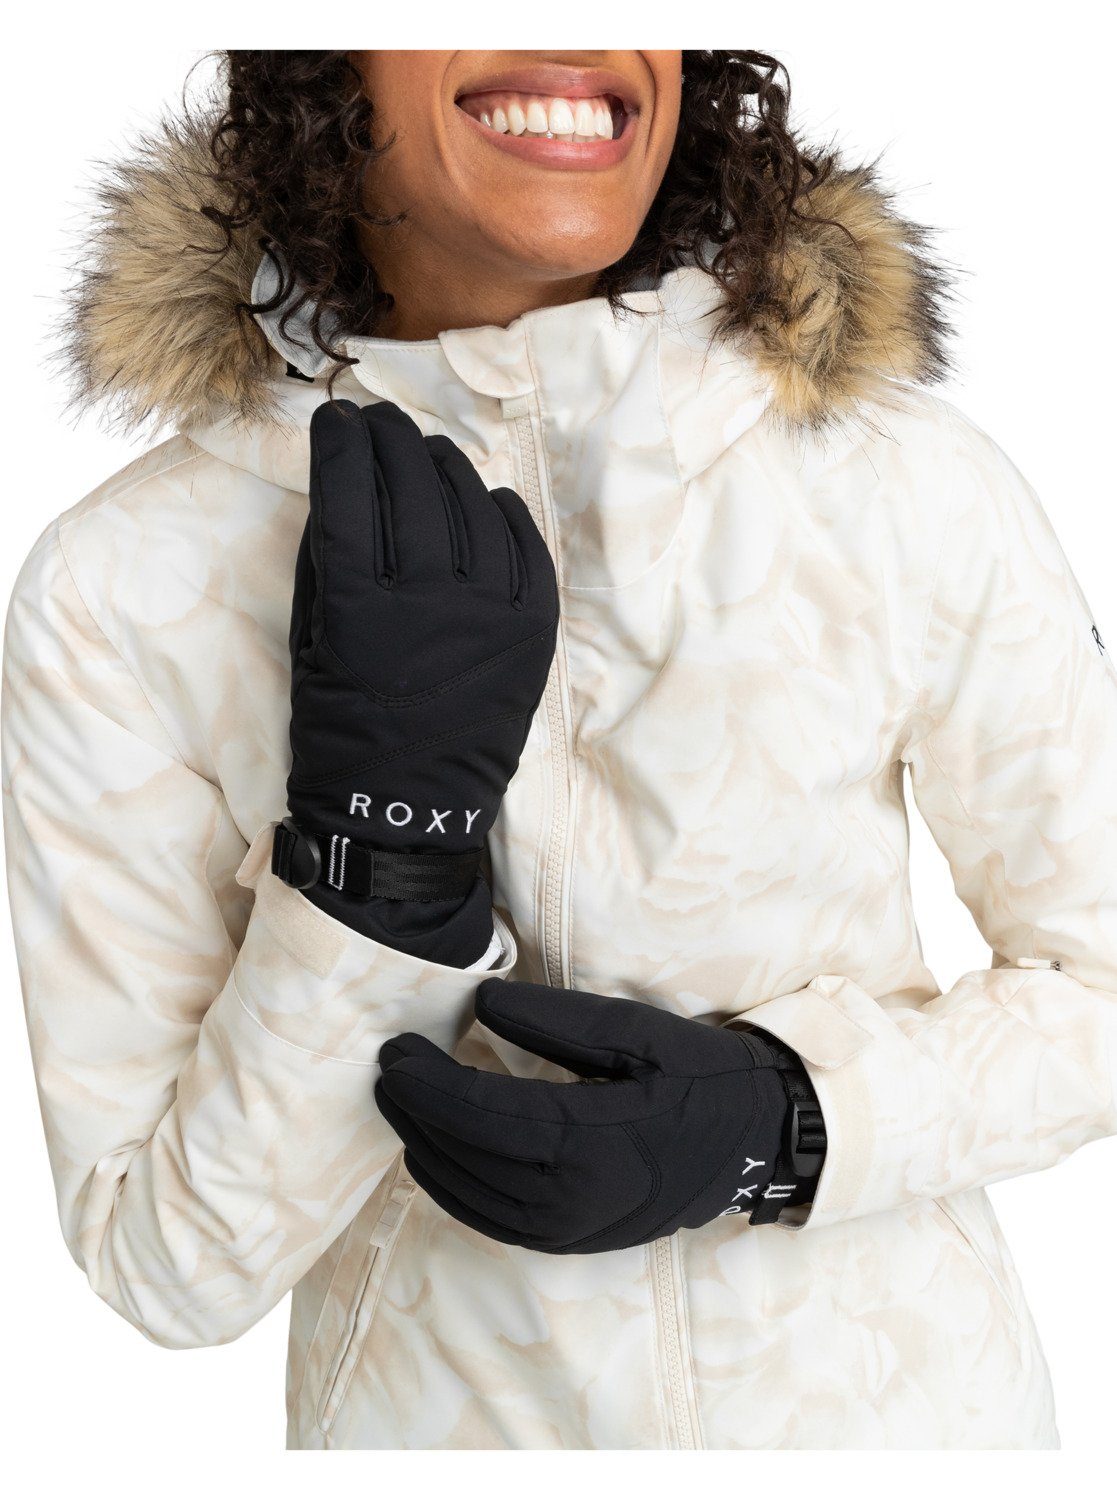 Roxy Snowboardhandschuhe ROXY Black True Jetty